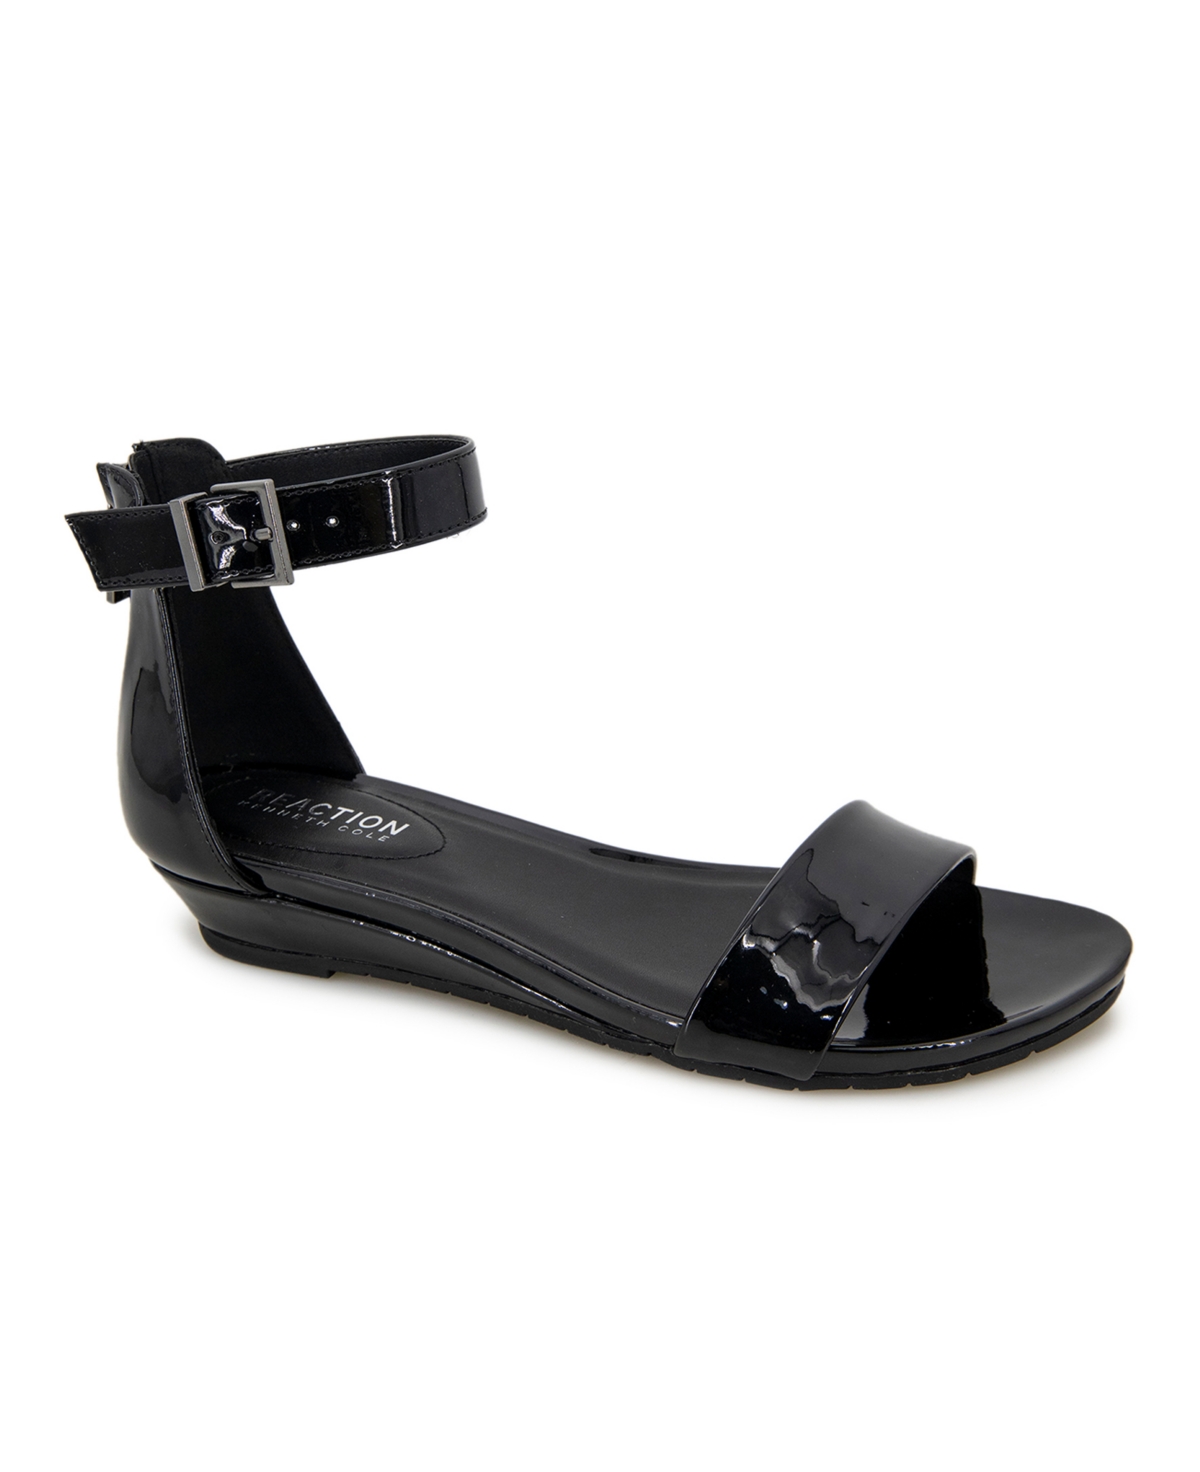 Women's Great Viber Wedge Sandals - Black